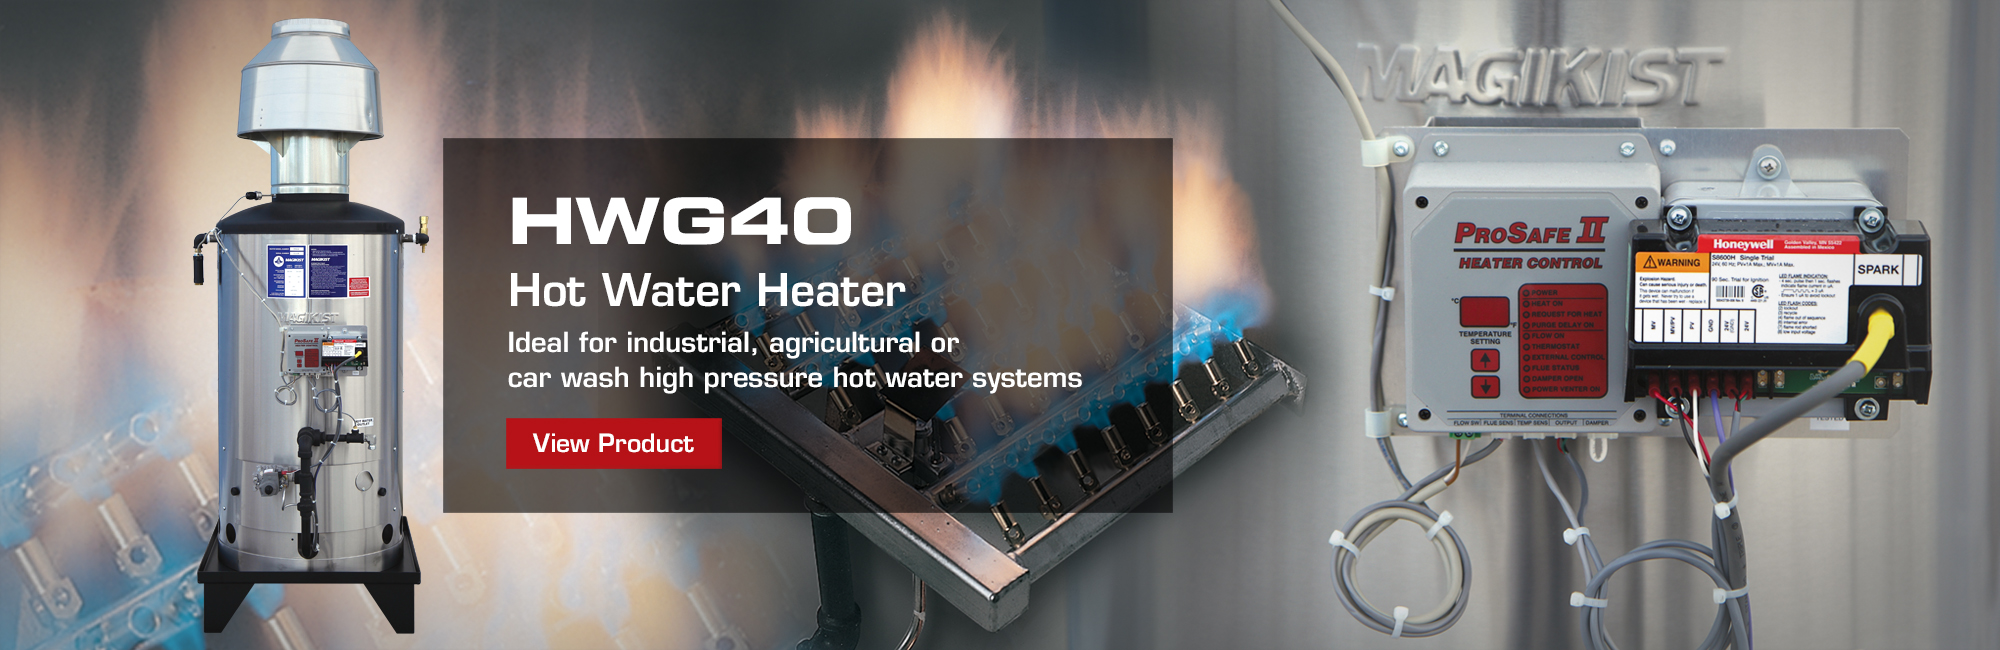 HWG40 Hot Water Heater